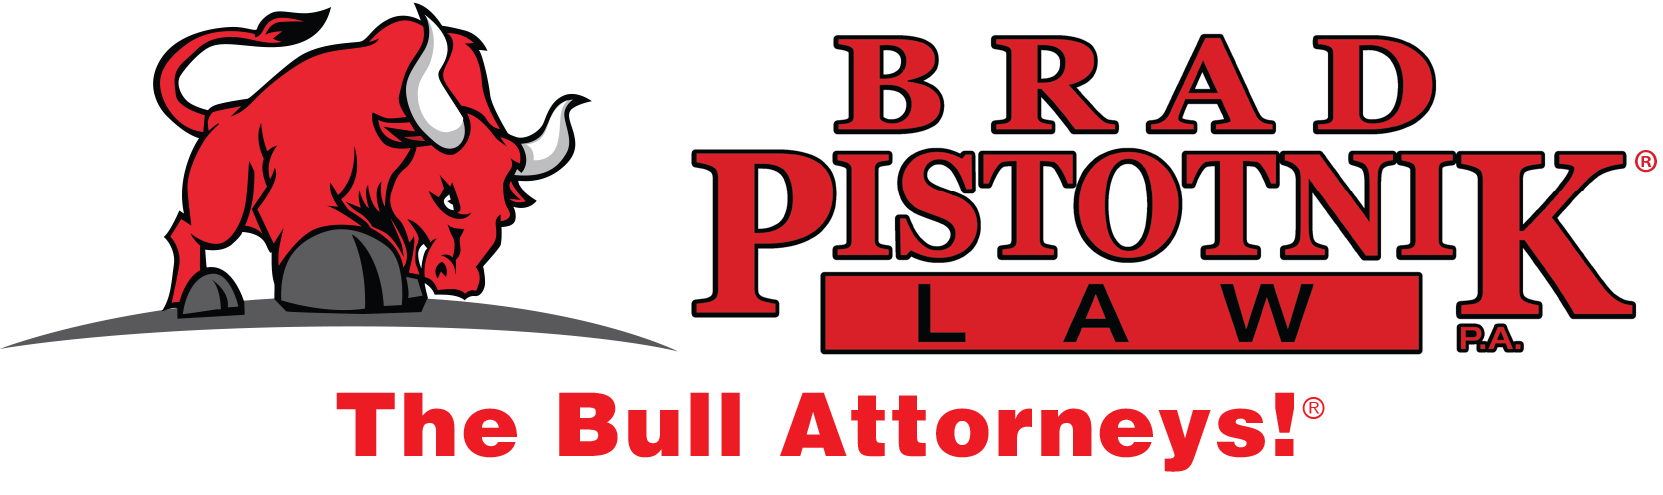 Brad Pistotnik Law, P.A.